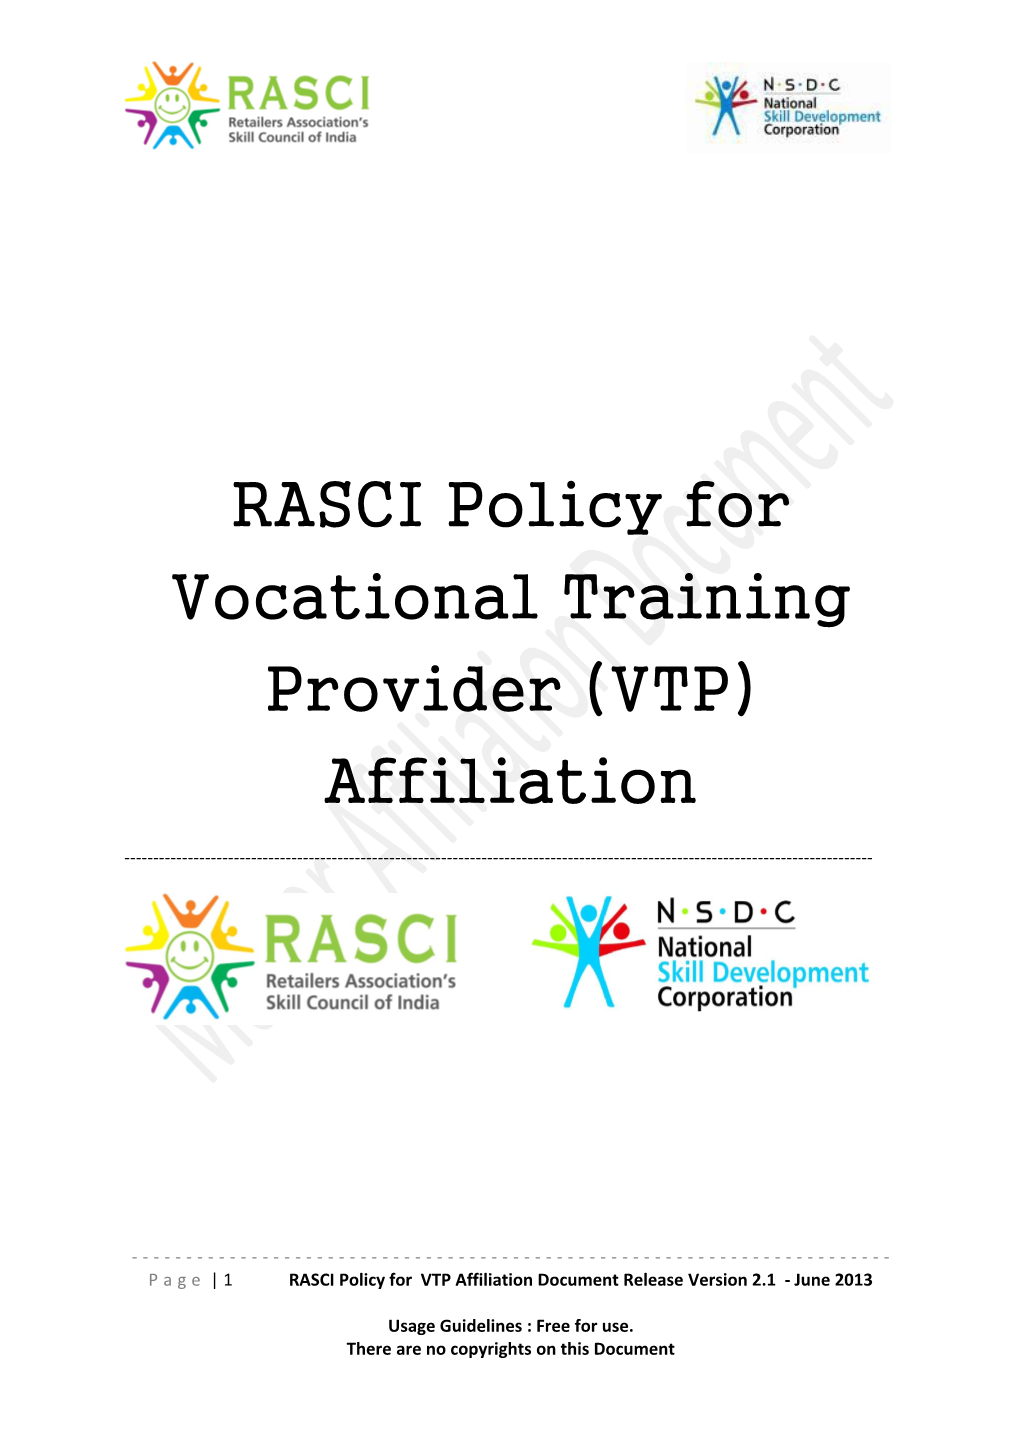 RASCI Policy for Vocational Training Provider (VTP) Affiliation